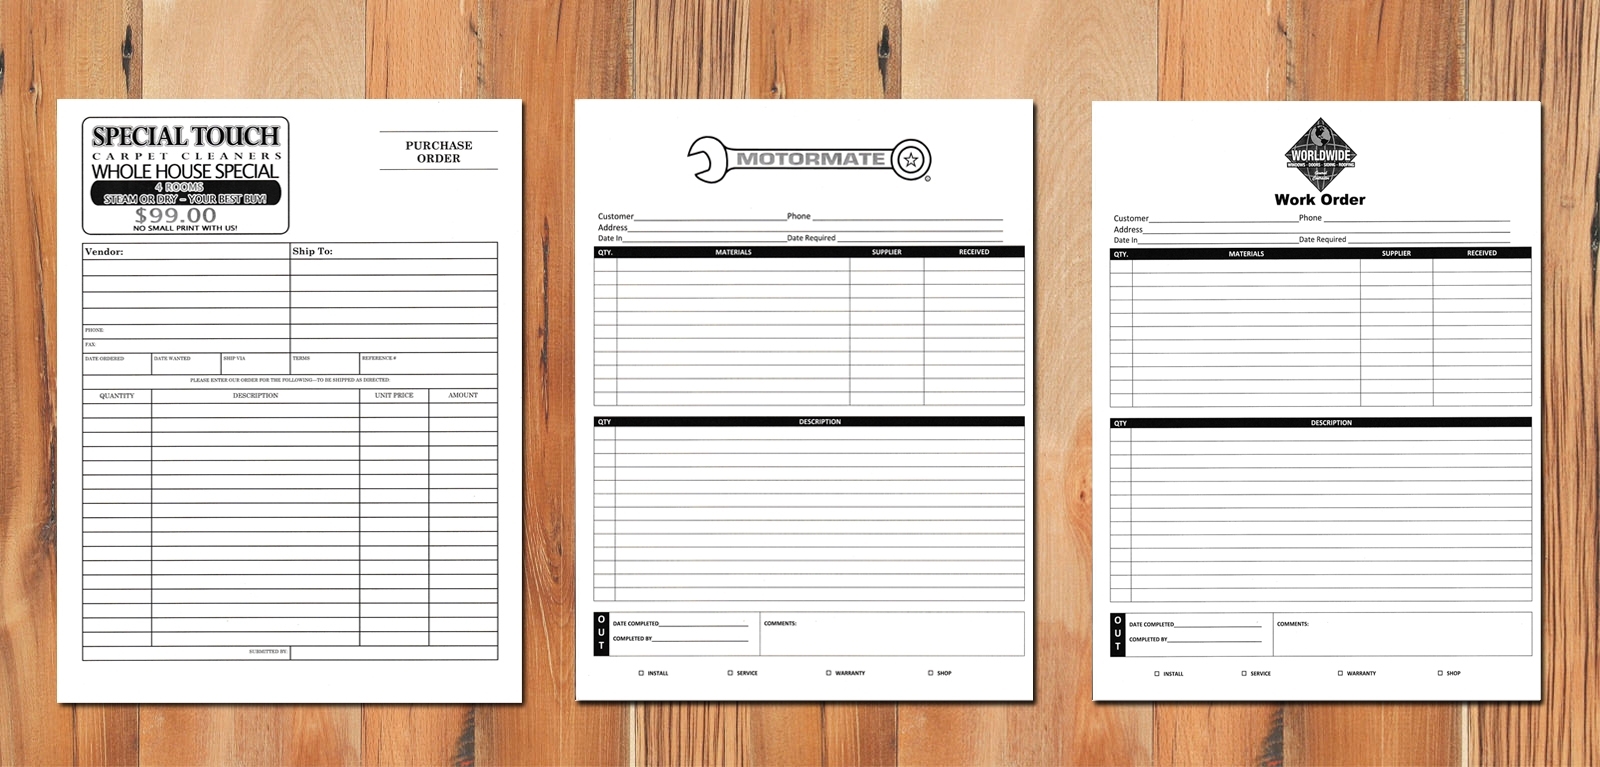 custom printed invoice books invoice template free 2016 custom invoice books